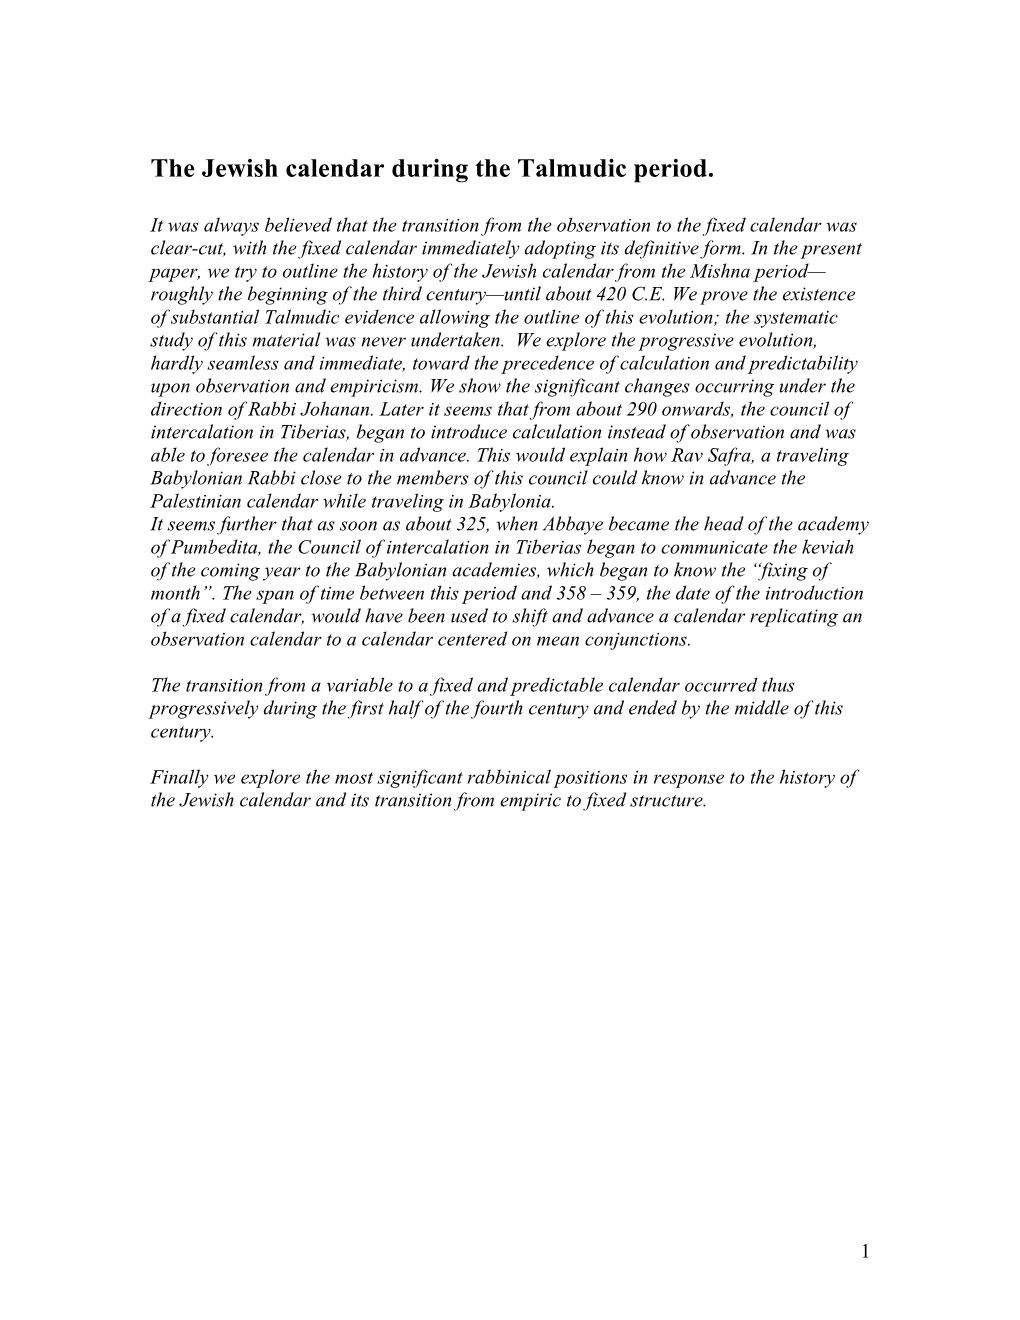 The Jewish Calendar During the Talmudic Period